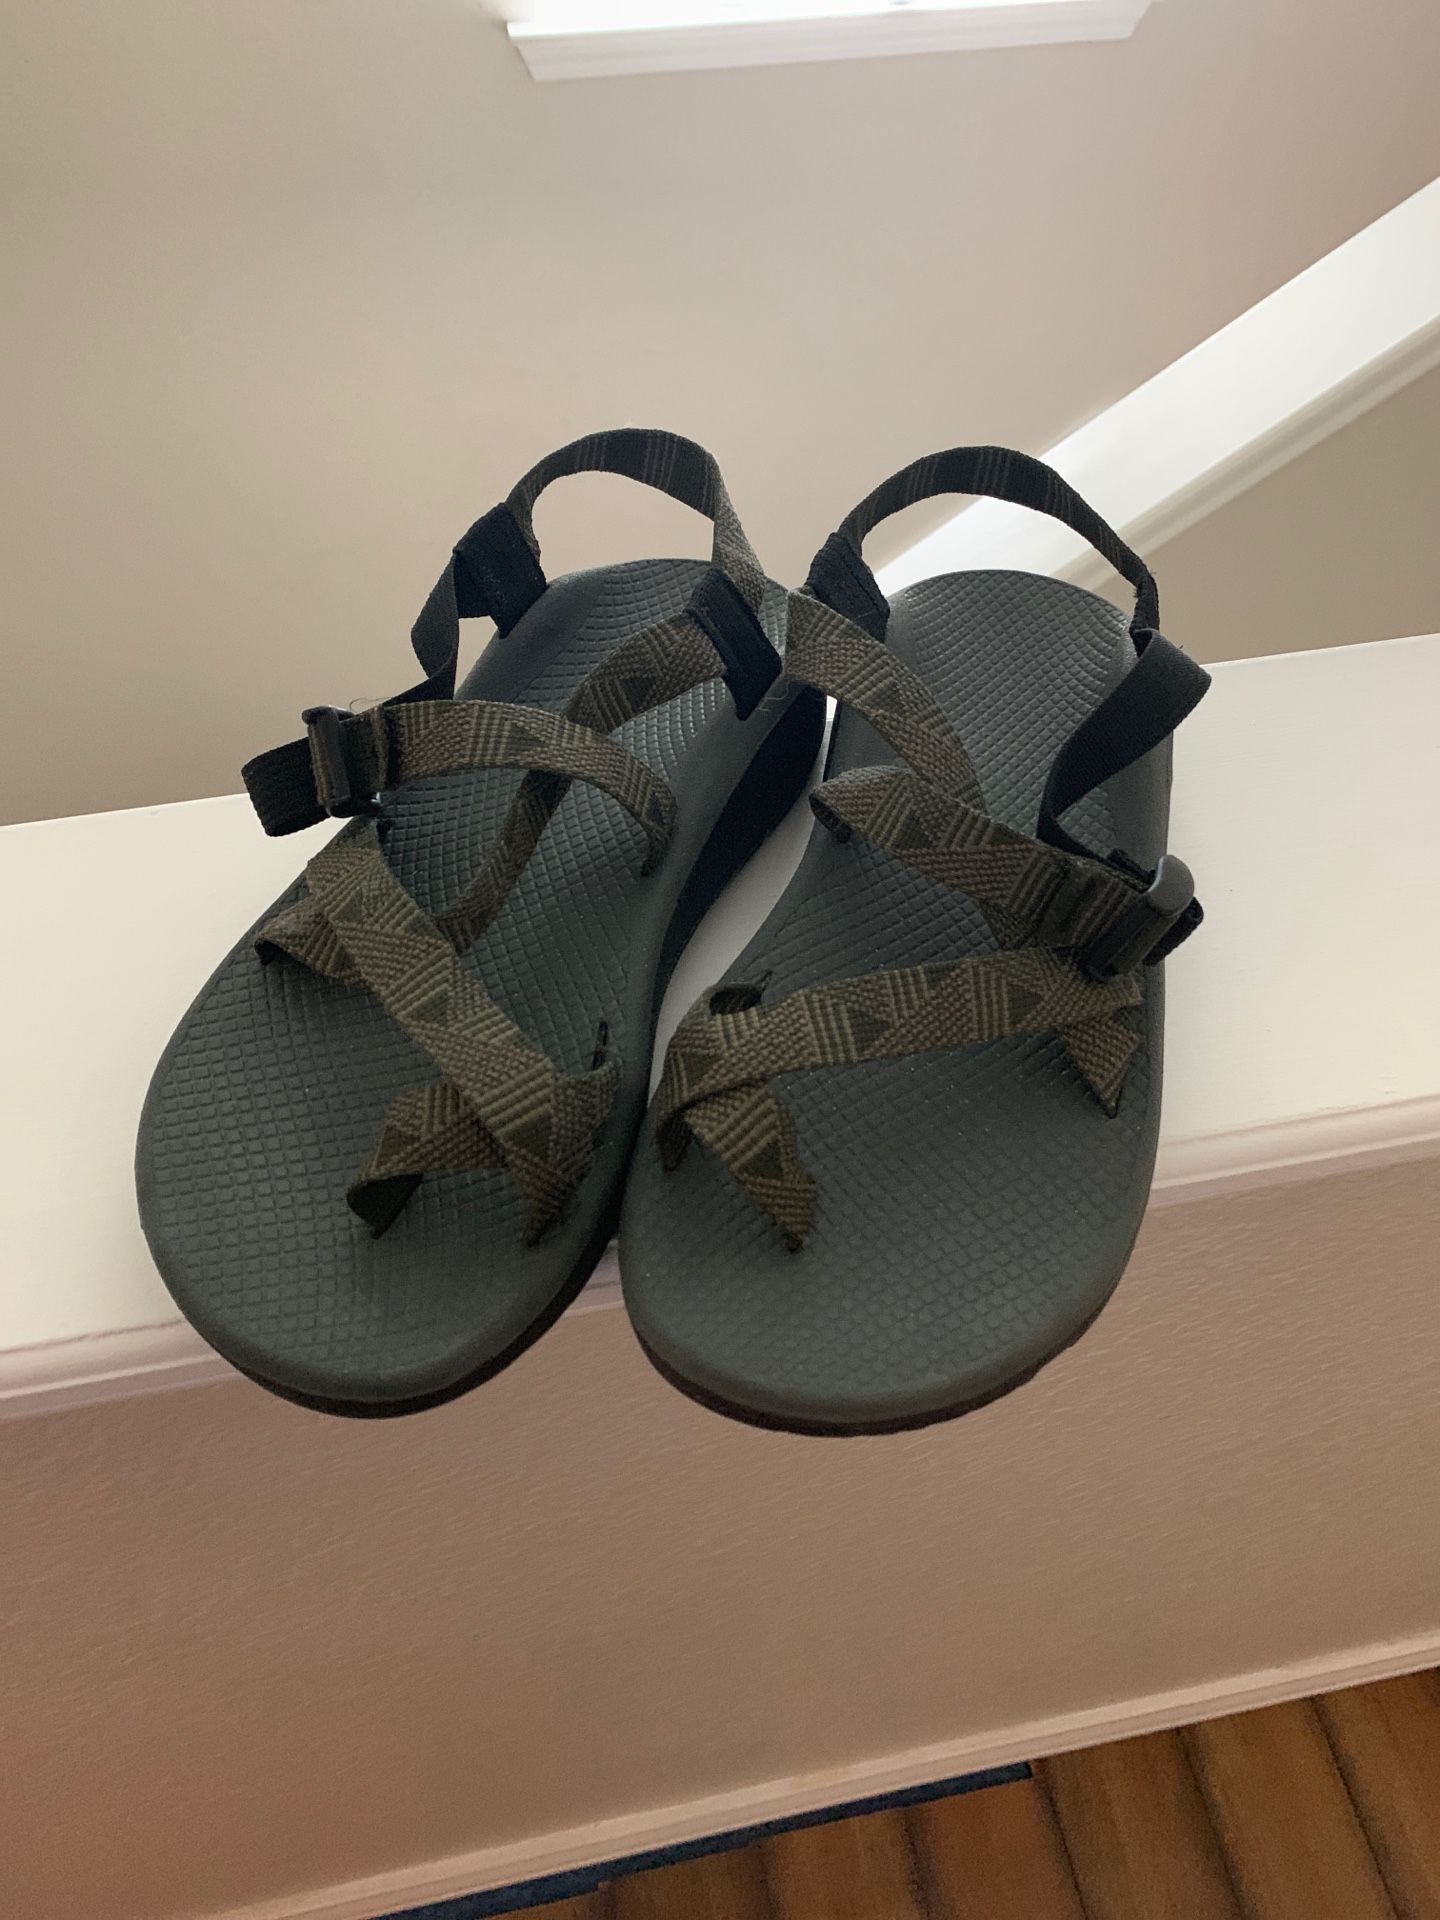 Men’s Chaco sandals size 10